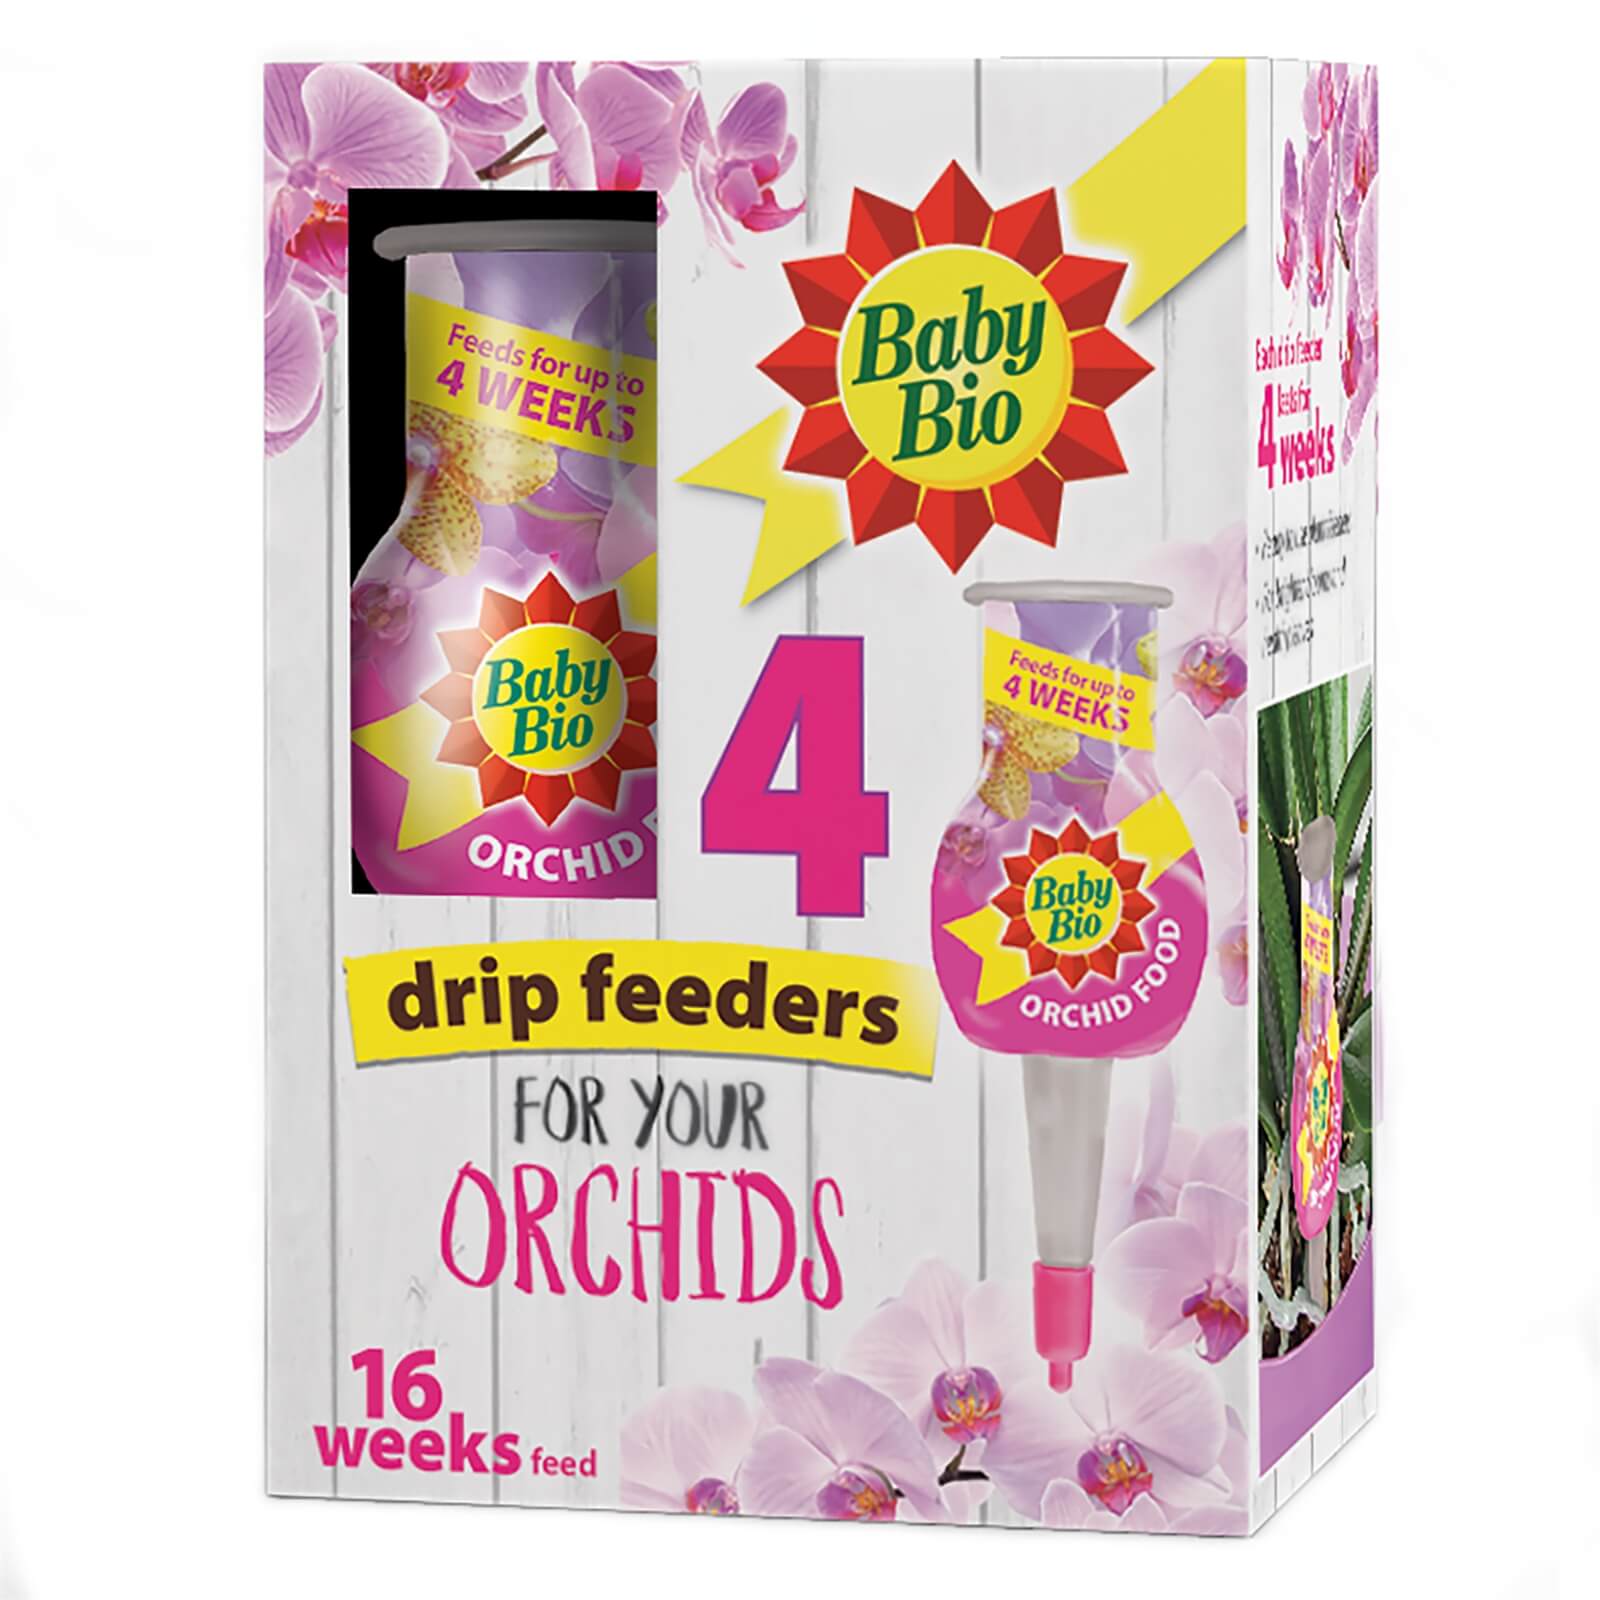 Baby Bio Orchid Drip Feeders - Pack of 4